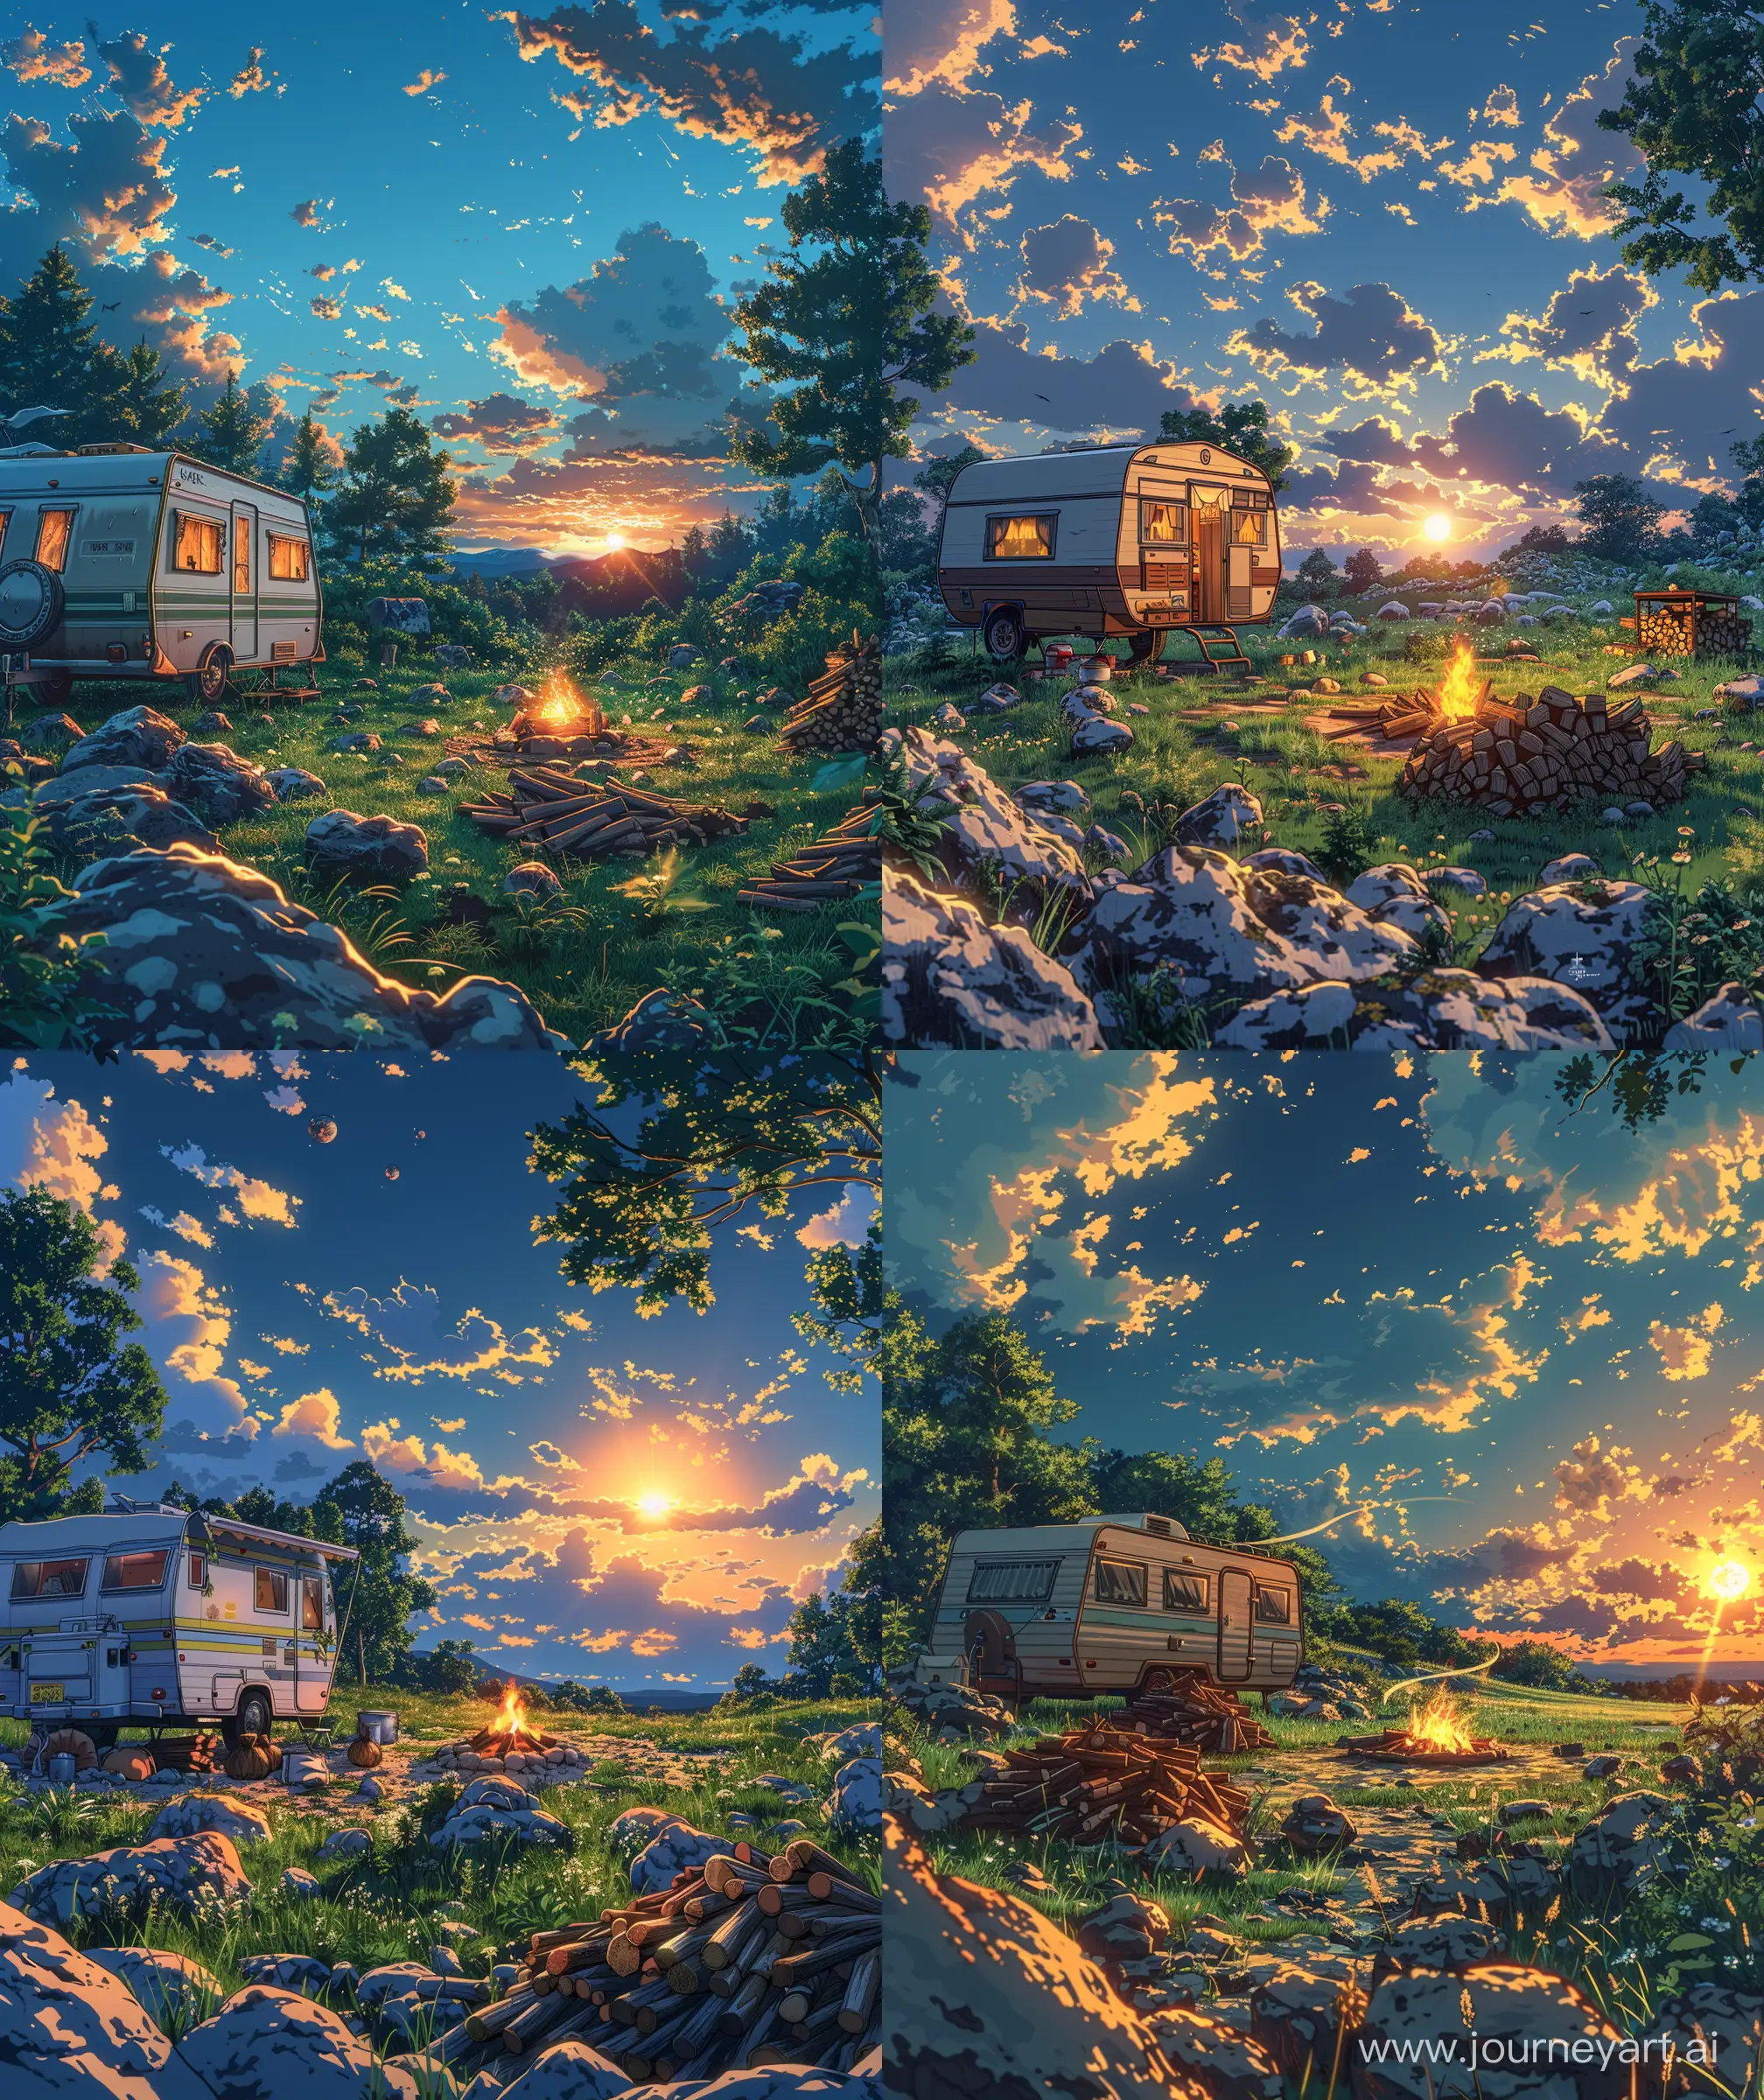 Breathtaking-AnimeStyle-Caravan-Camping-Scene-with-Bougainville-Decoration